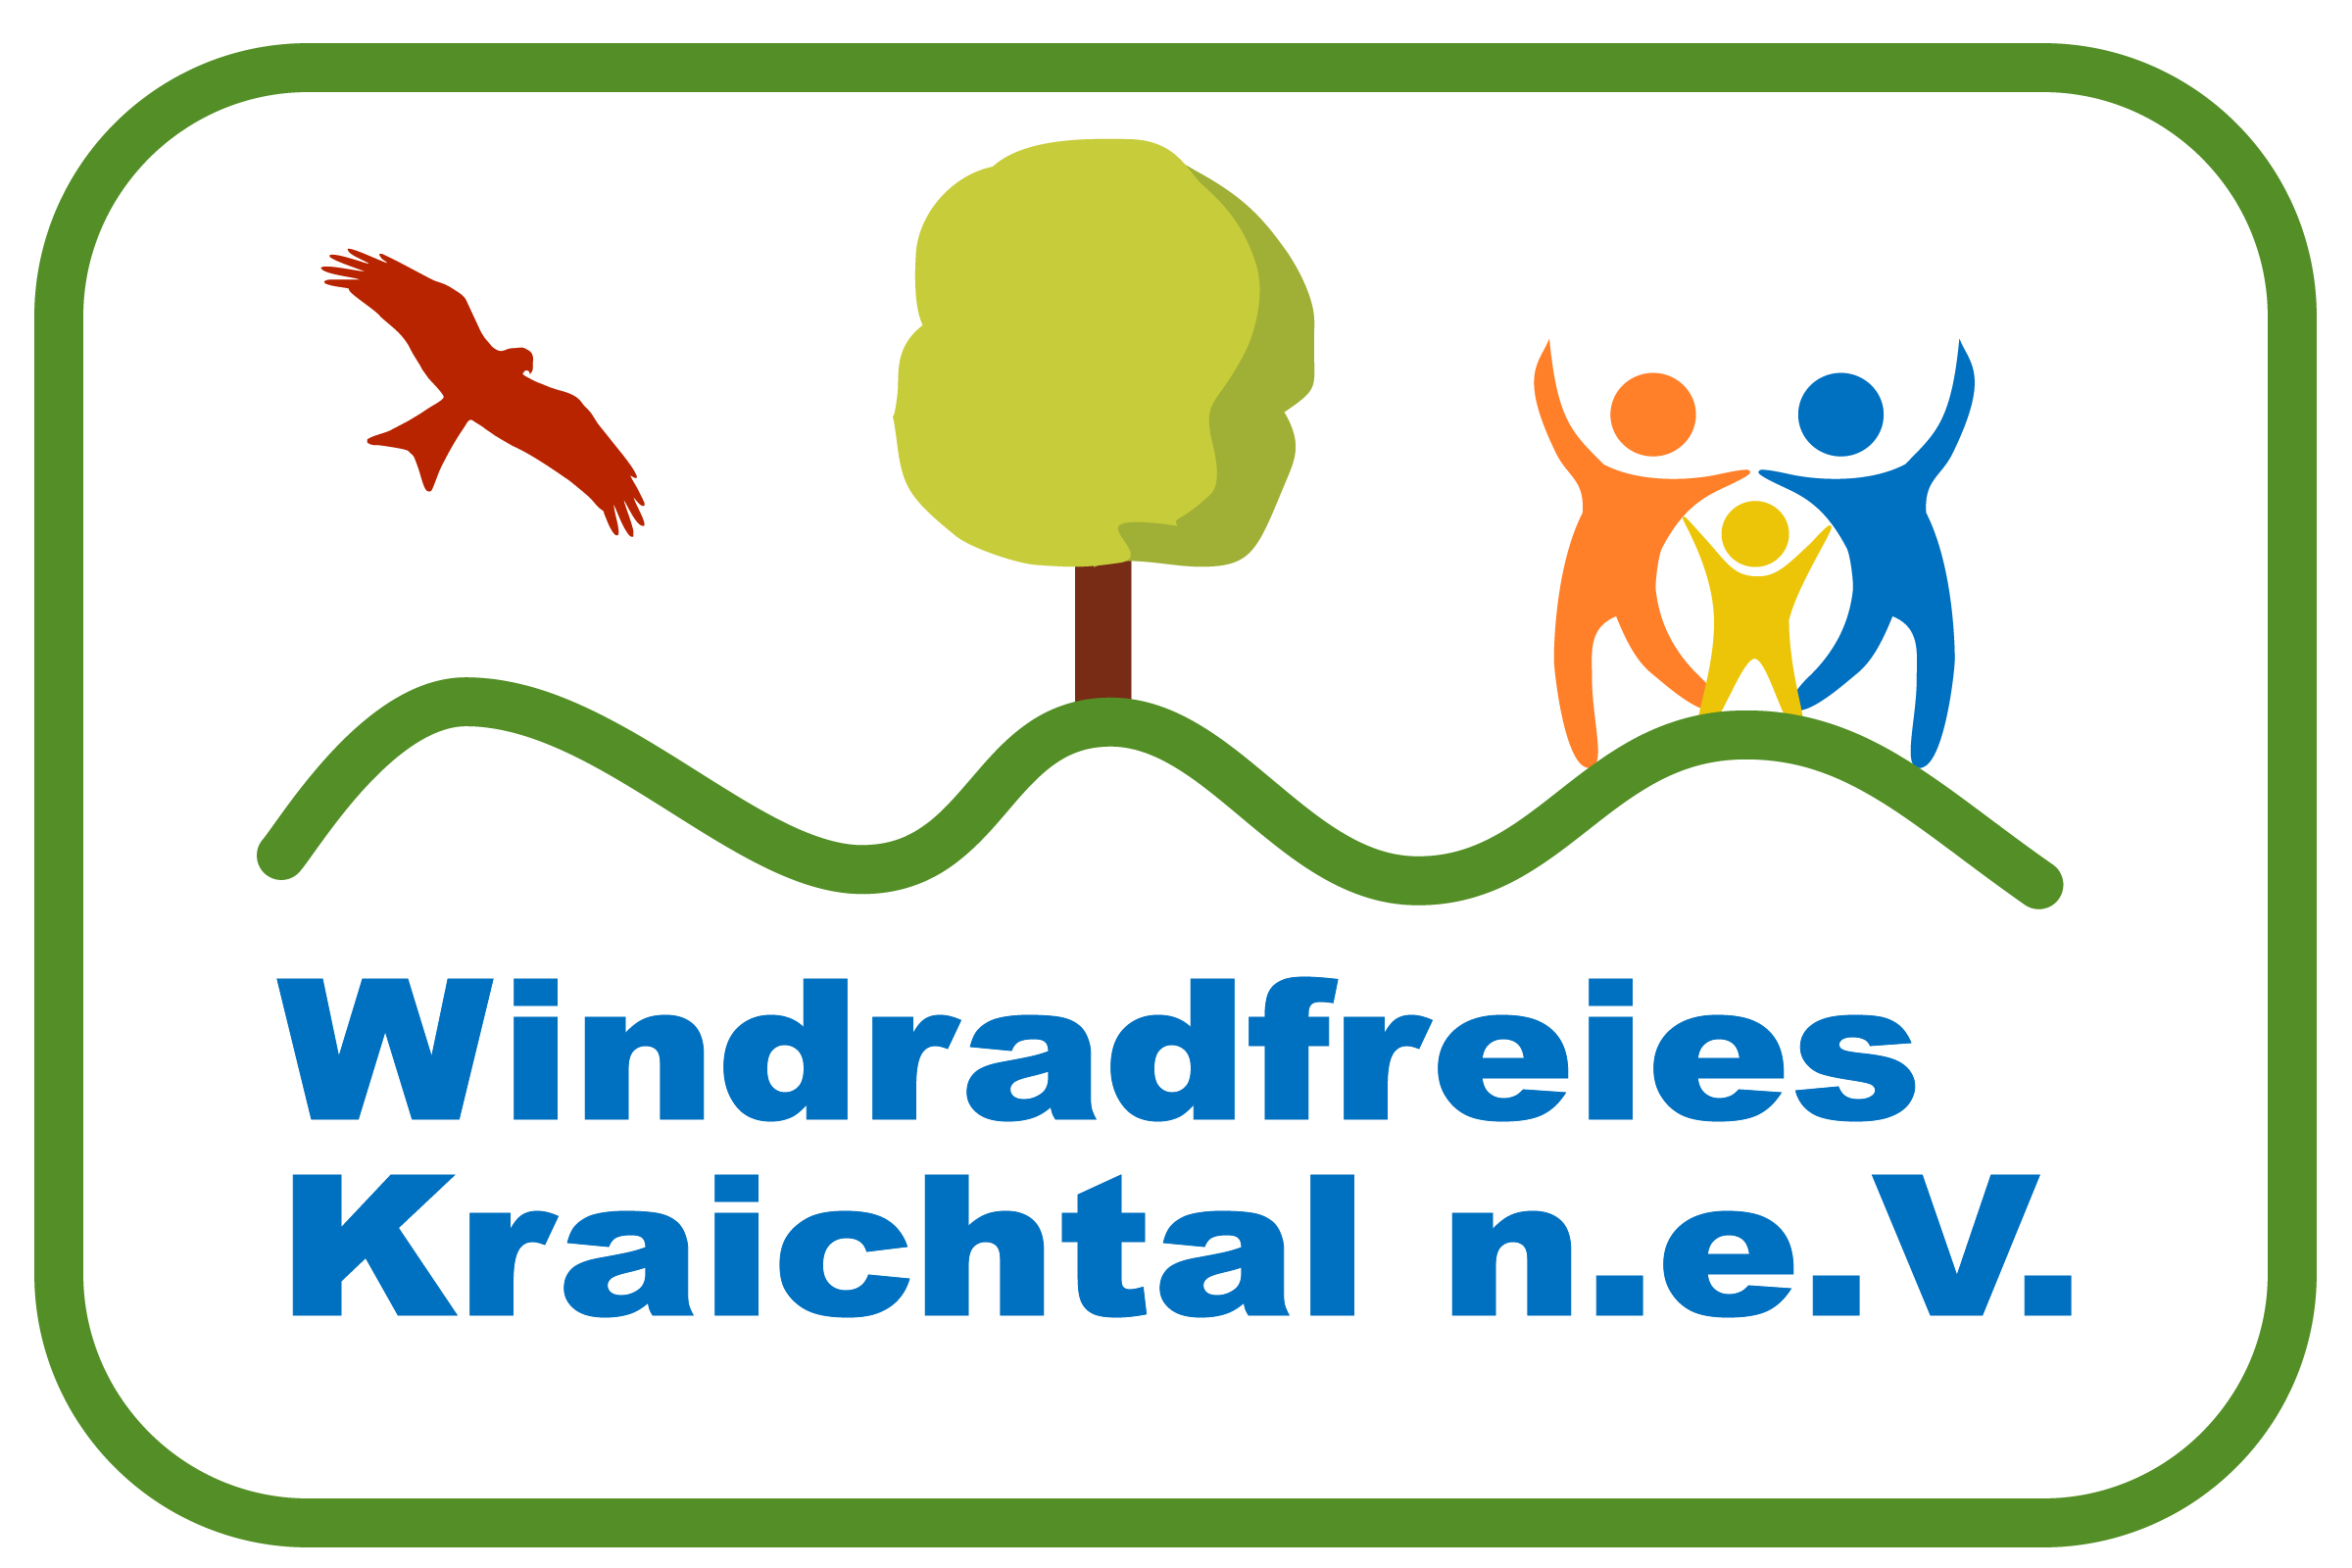 (c) Windradfreies-kraichtal.de